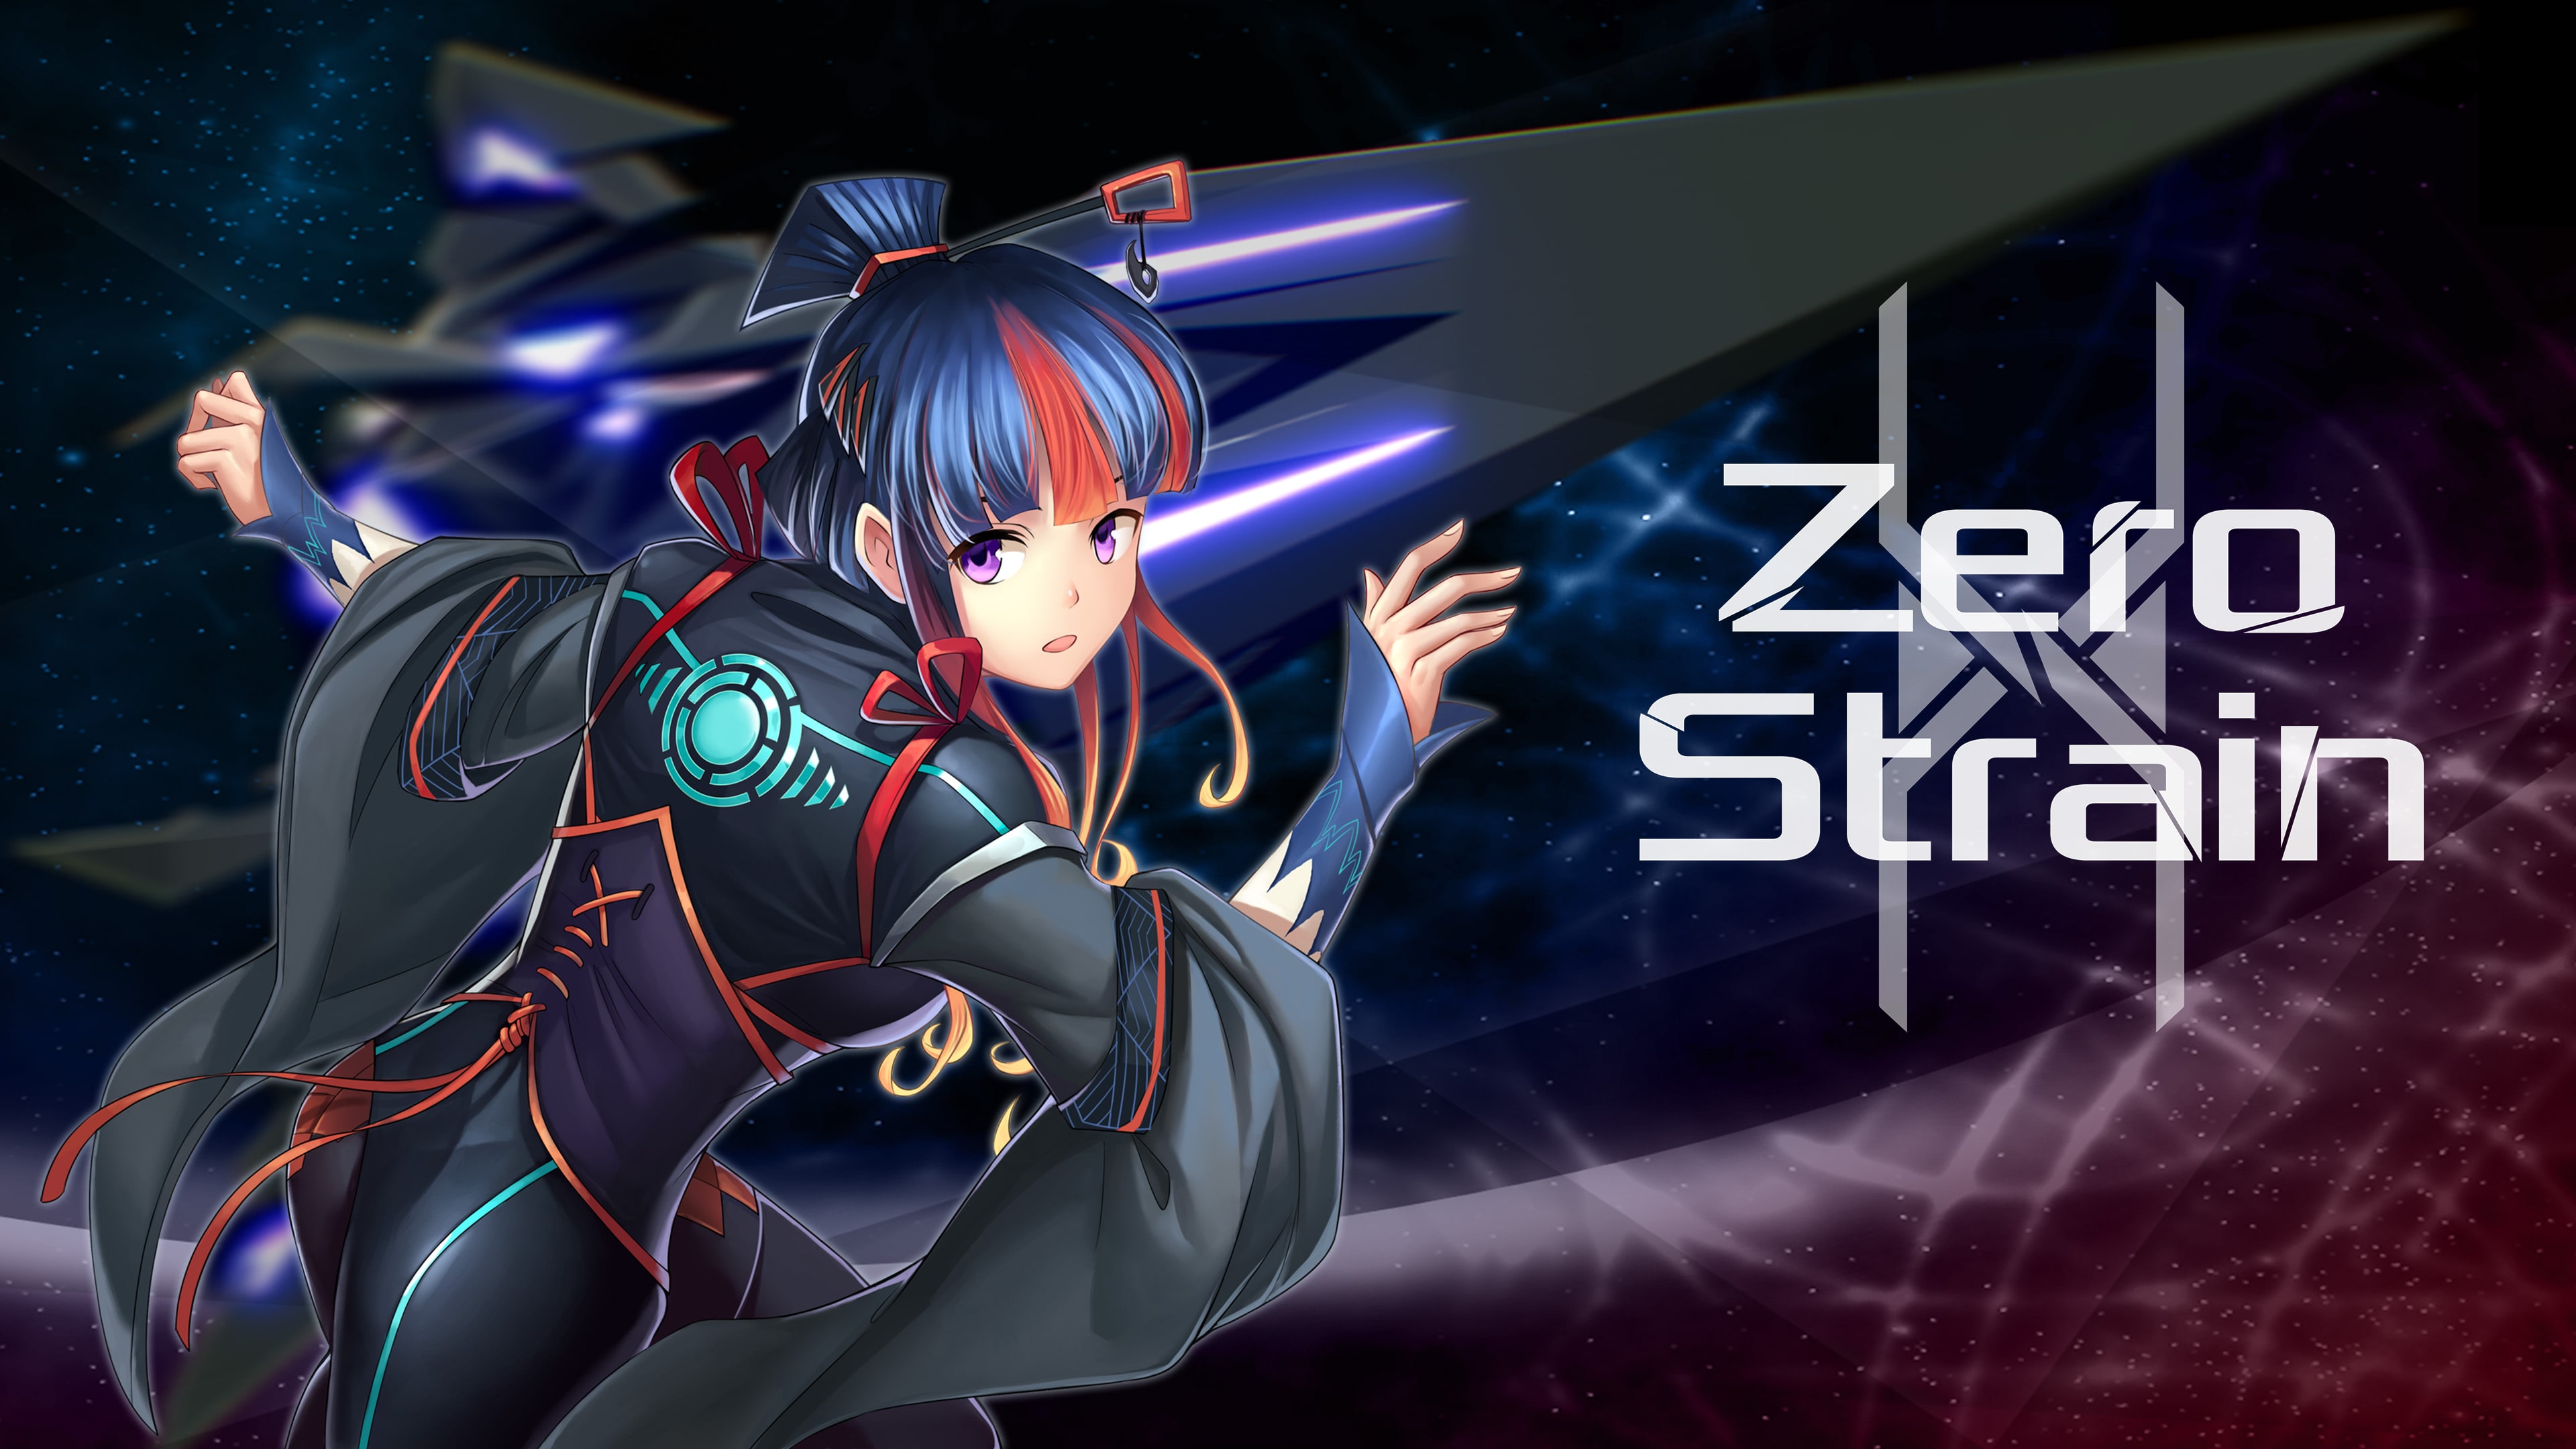 Zero Strain (English, Japanese, Traditional Chinese)